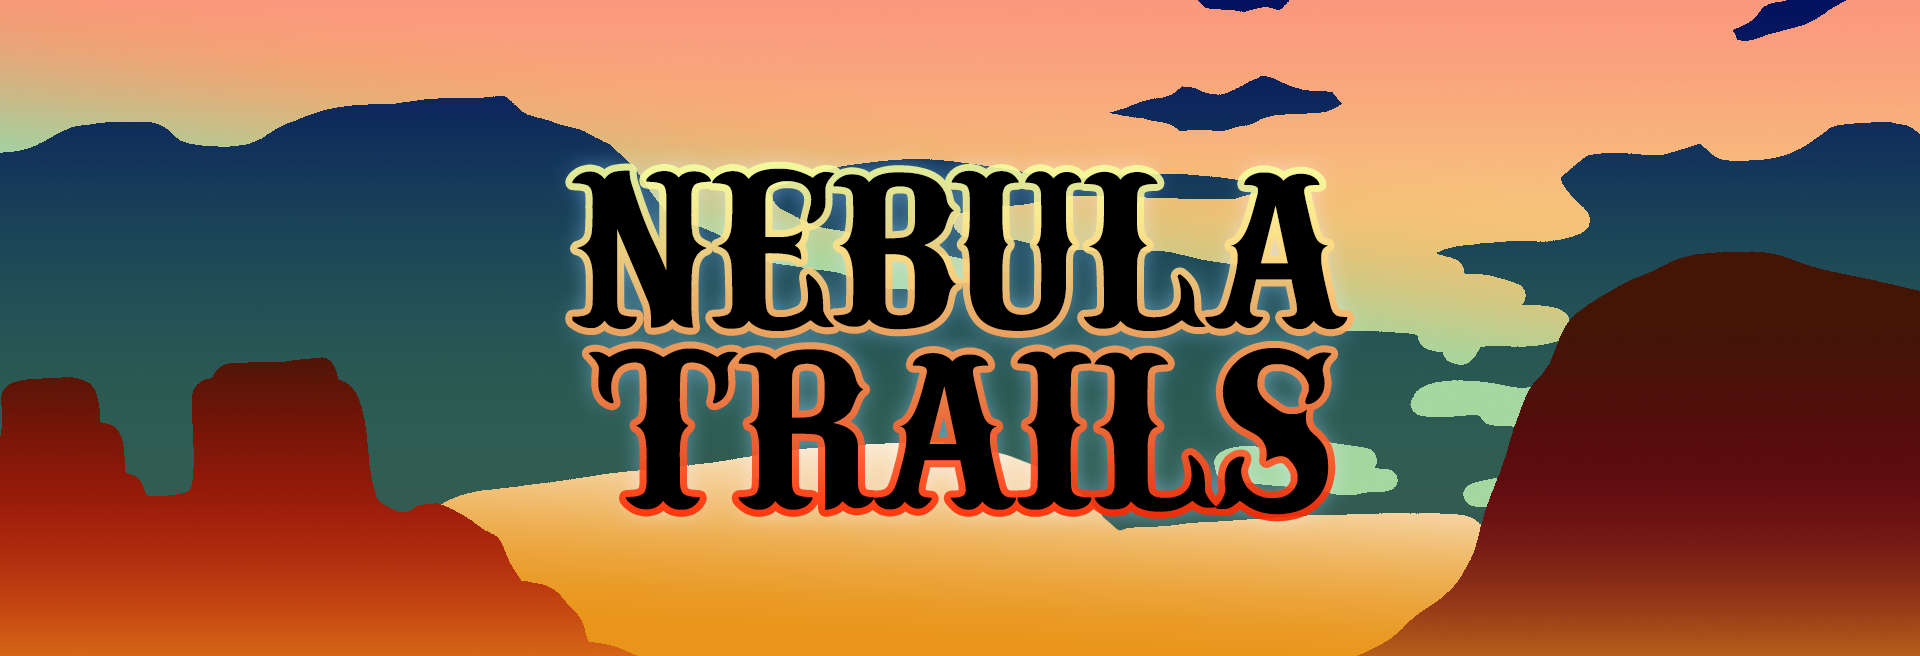 Nebula Trails